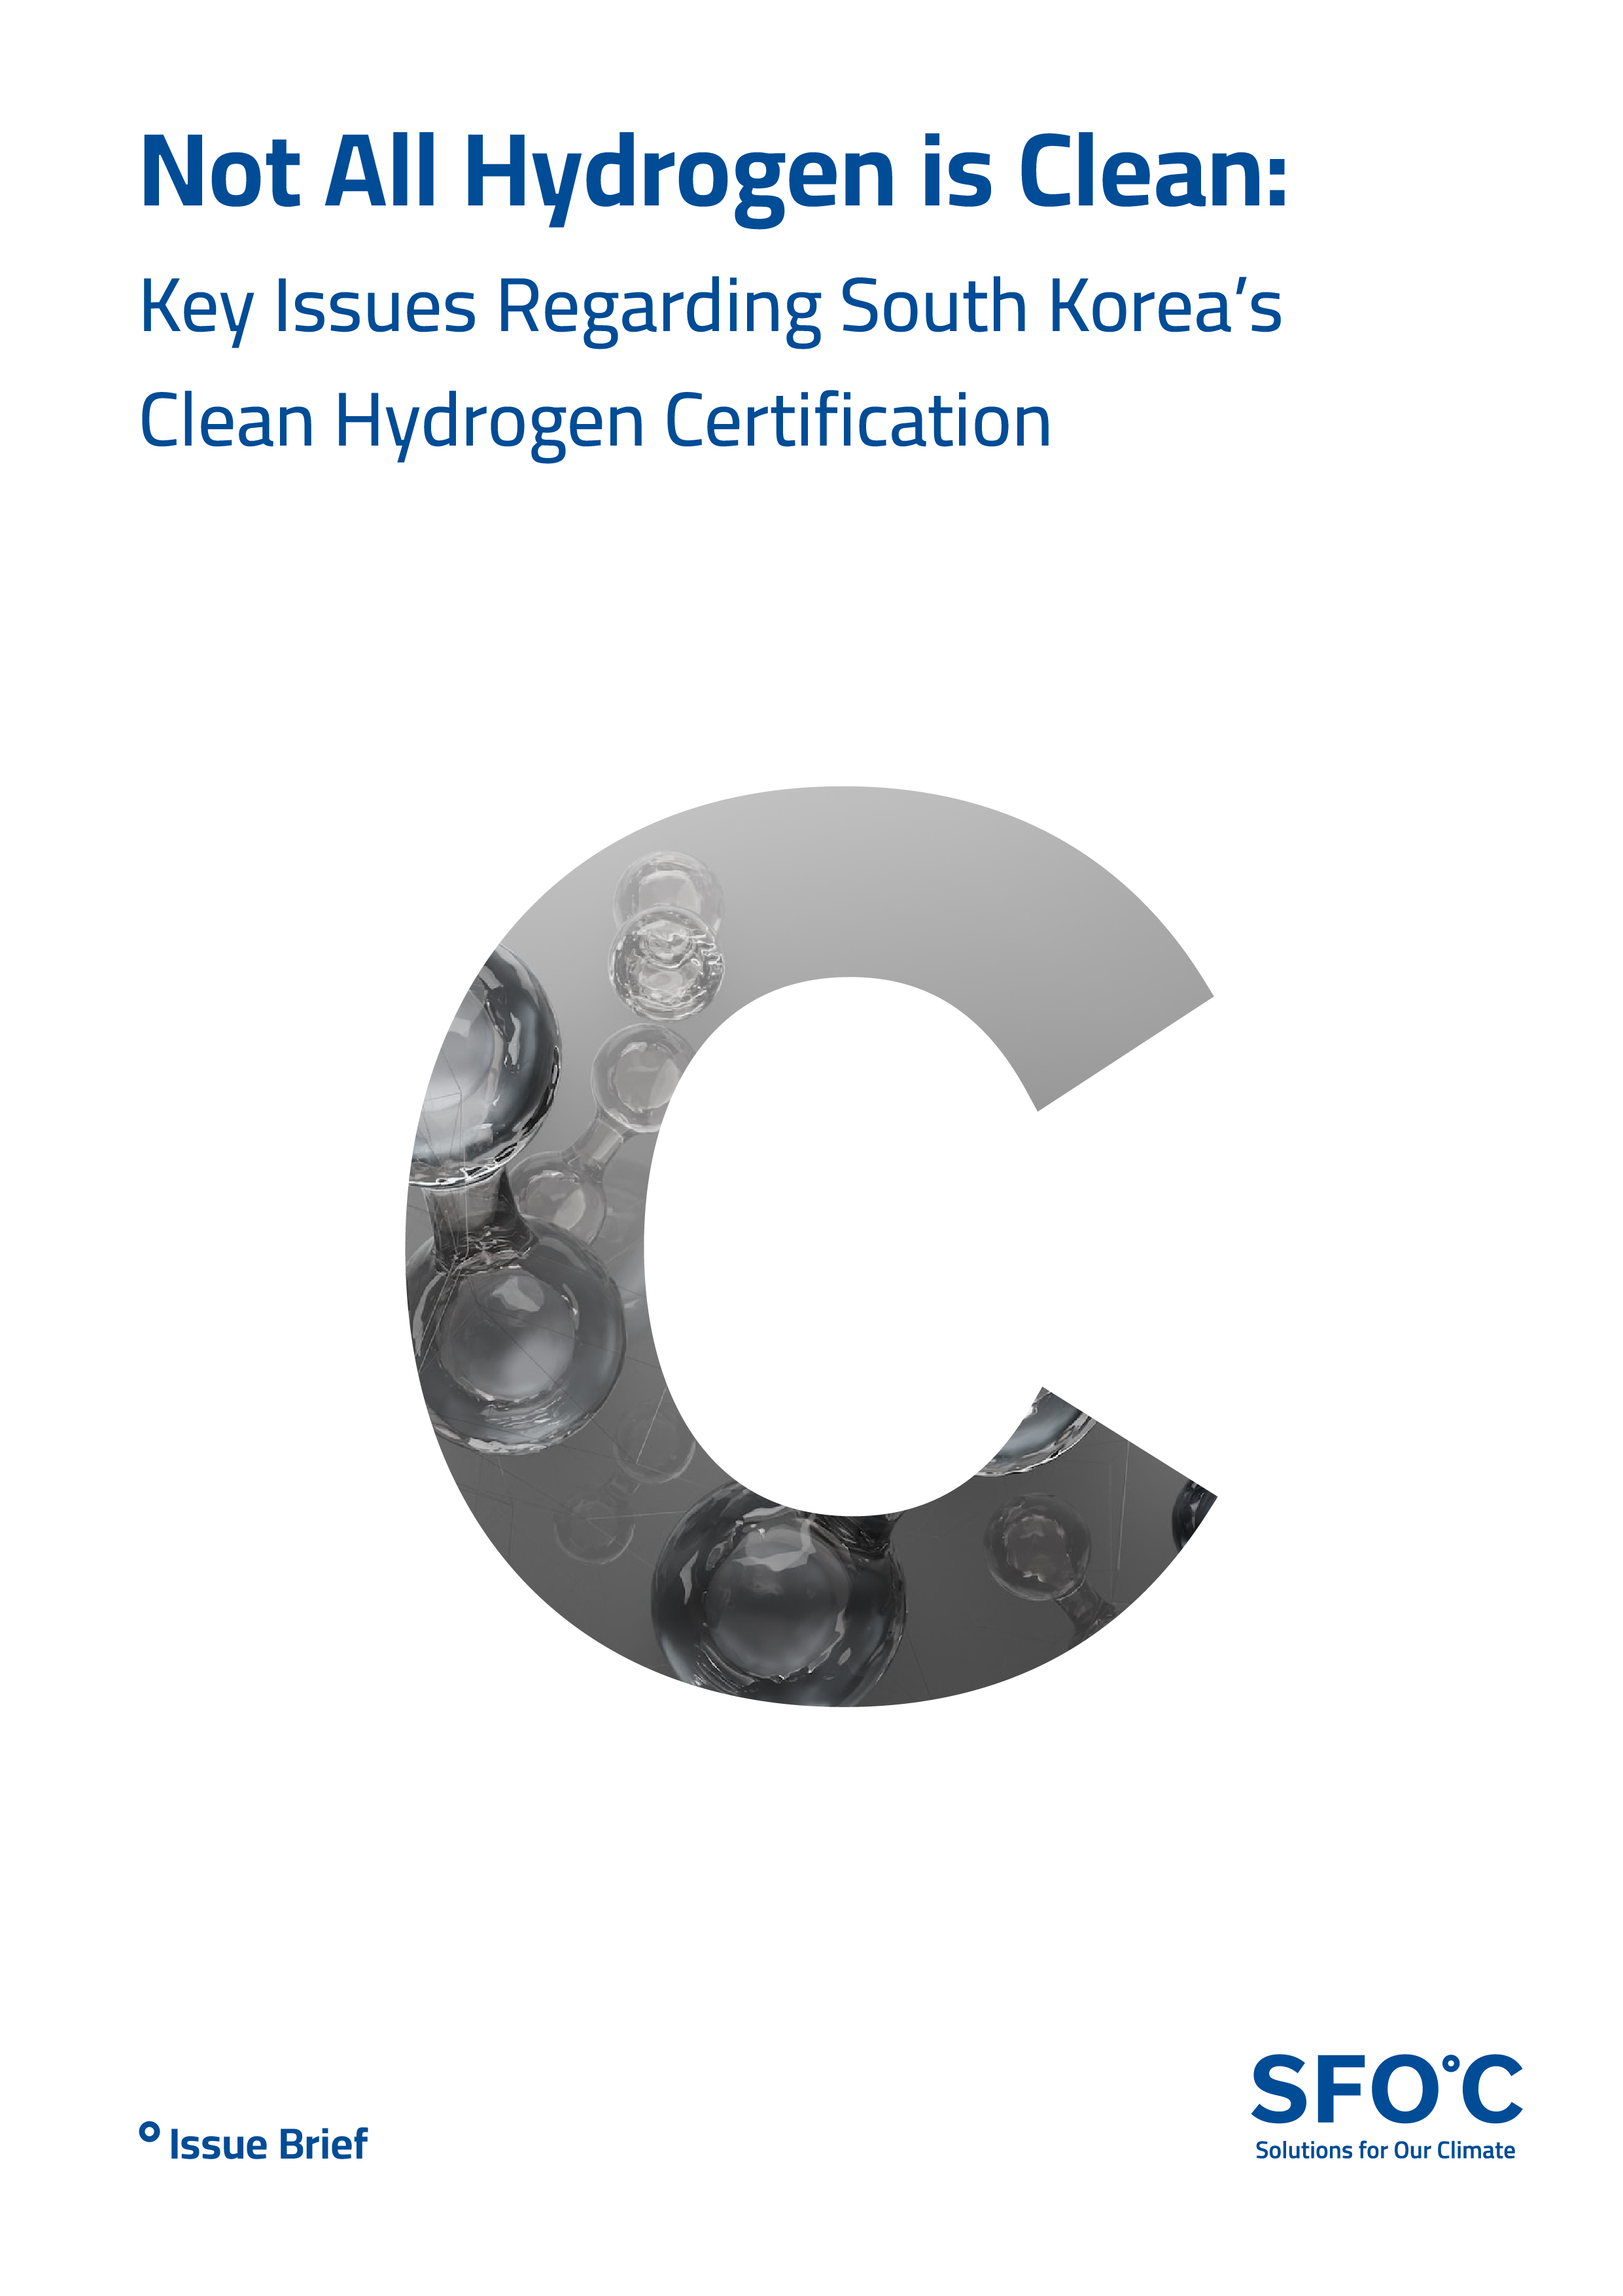 [Report] Not All Hydrogen is Clean: Key Issues Regarding South Korea's Clean Hydrogen Certification